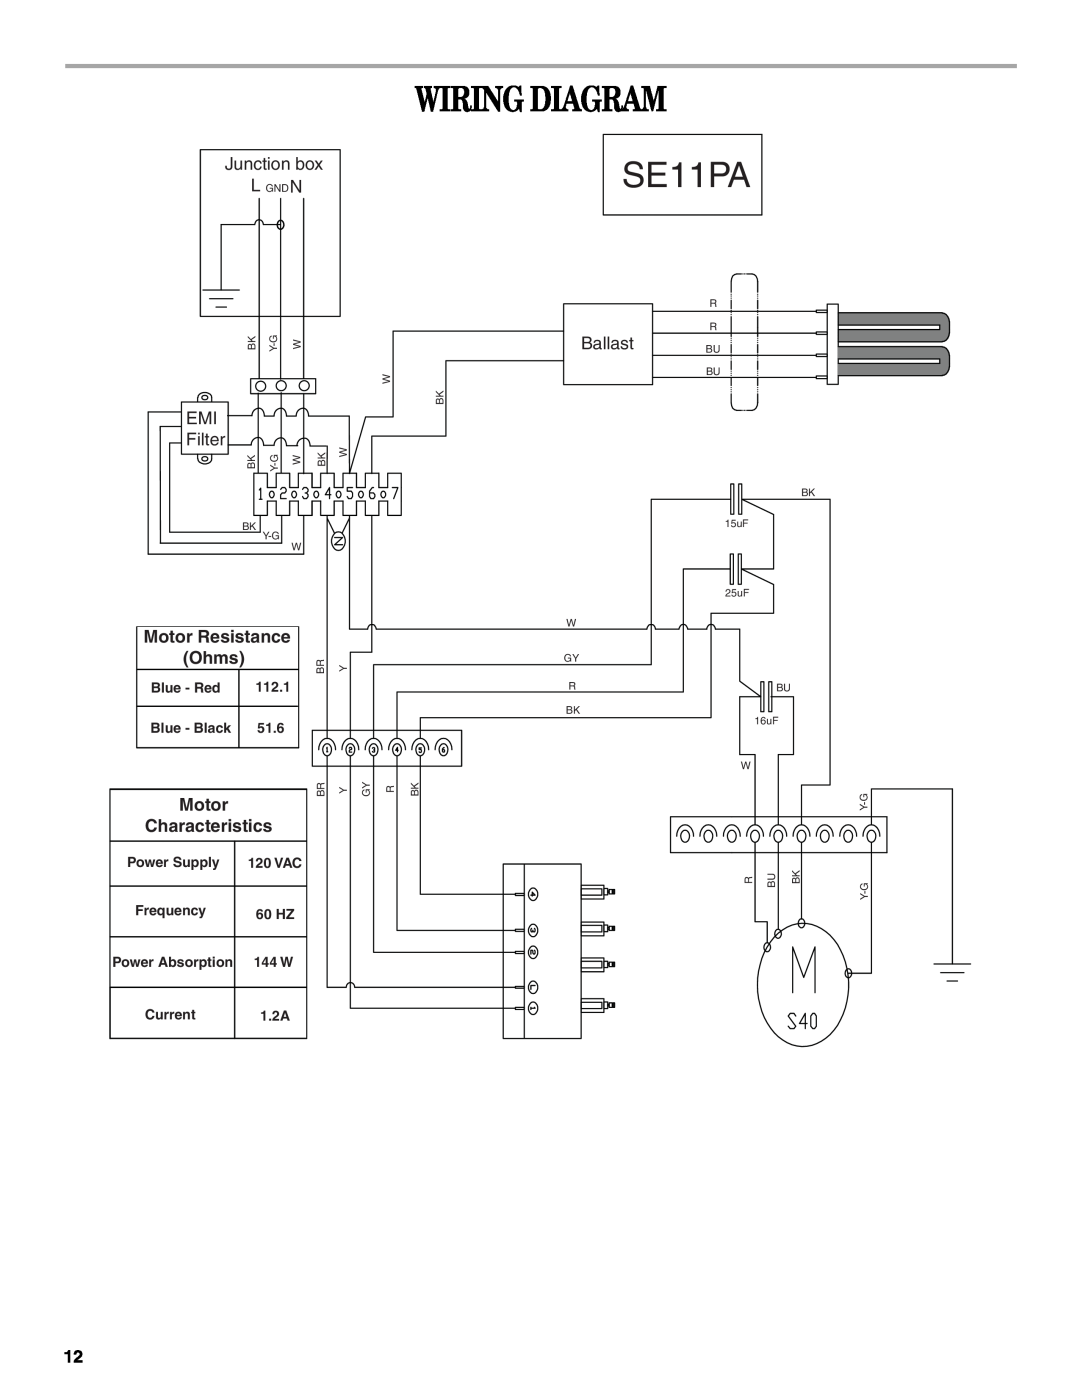 Whirlpool GXW7336DXS Wiring Diagram, SE11PA, Junction box L GNDN, EMI Filter, Motor Resistance, Ohms, BallastBU, 112.1 